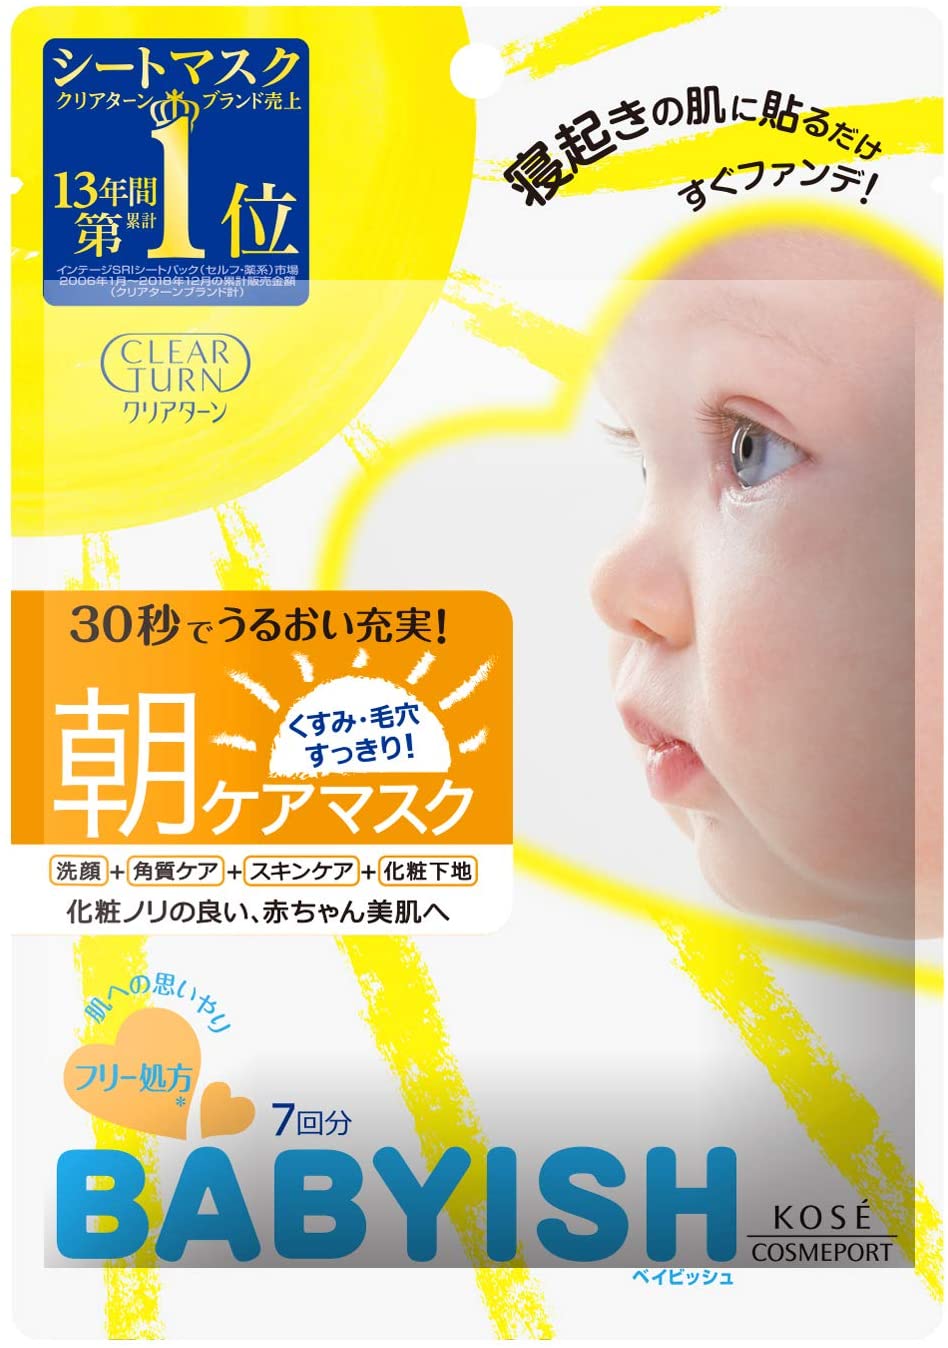 Canmake 3.5G Natural Chiffon Eyebrow in 05 Strawberry Mocha Shade - YOYO JAPAN